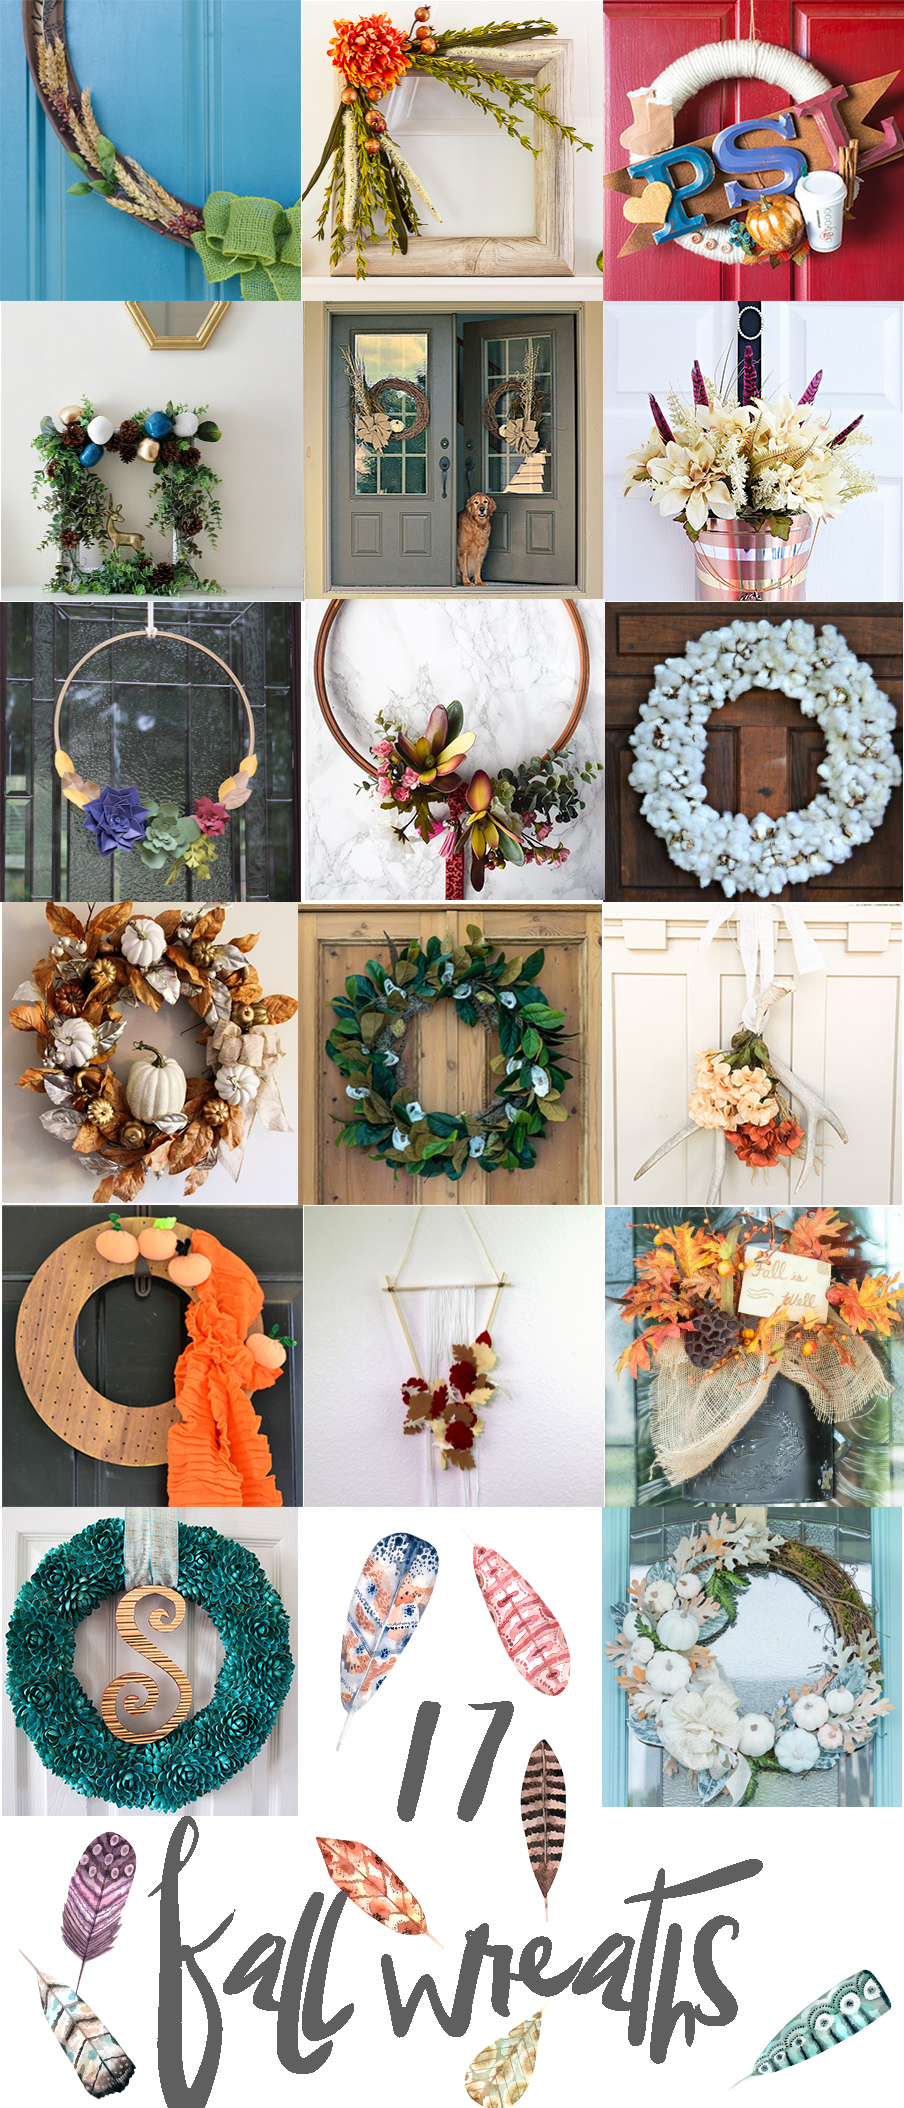 Fall Wreath Blog Hop